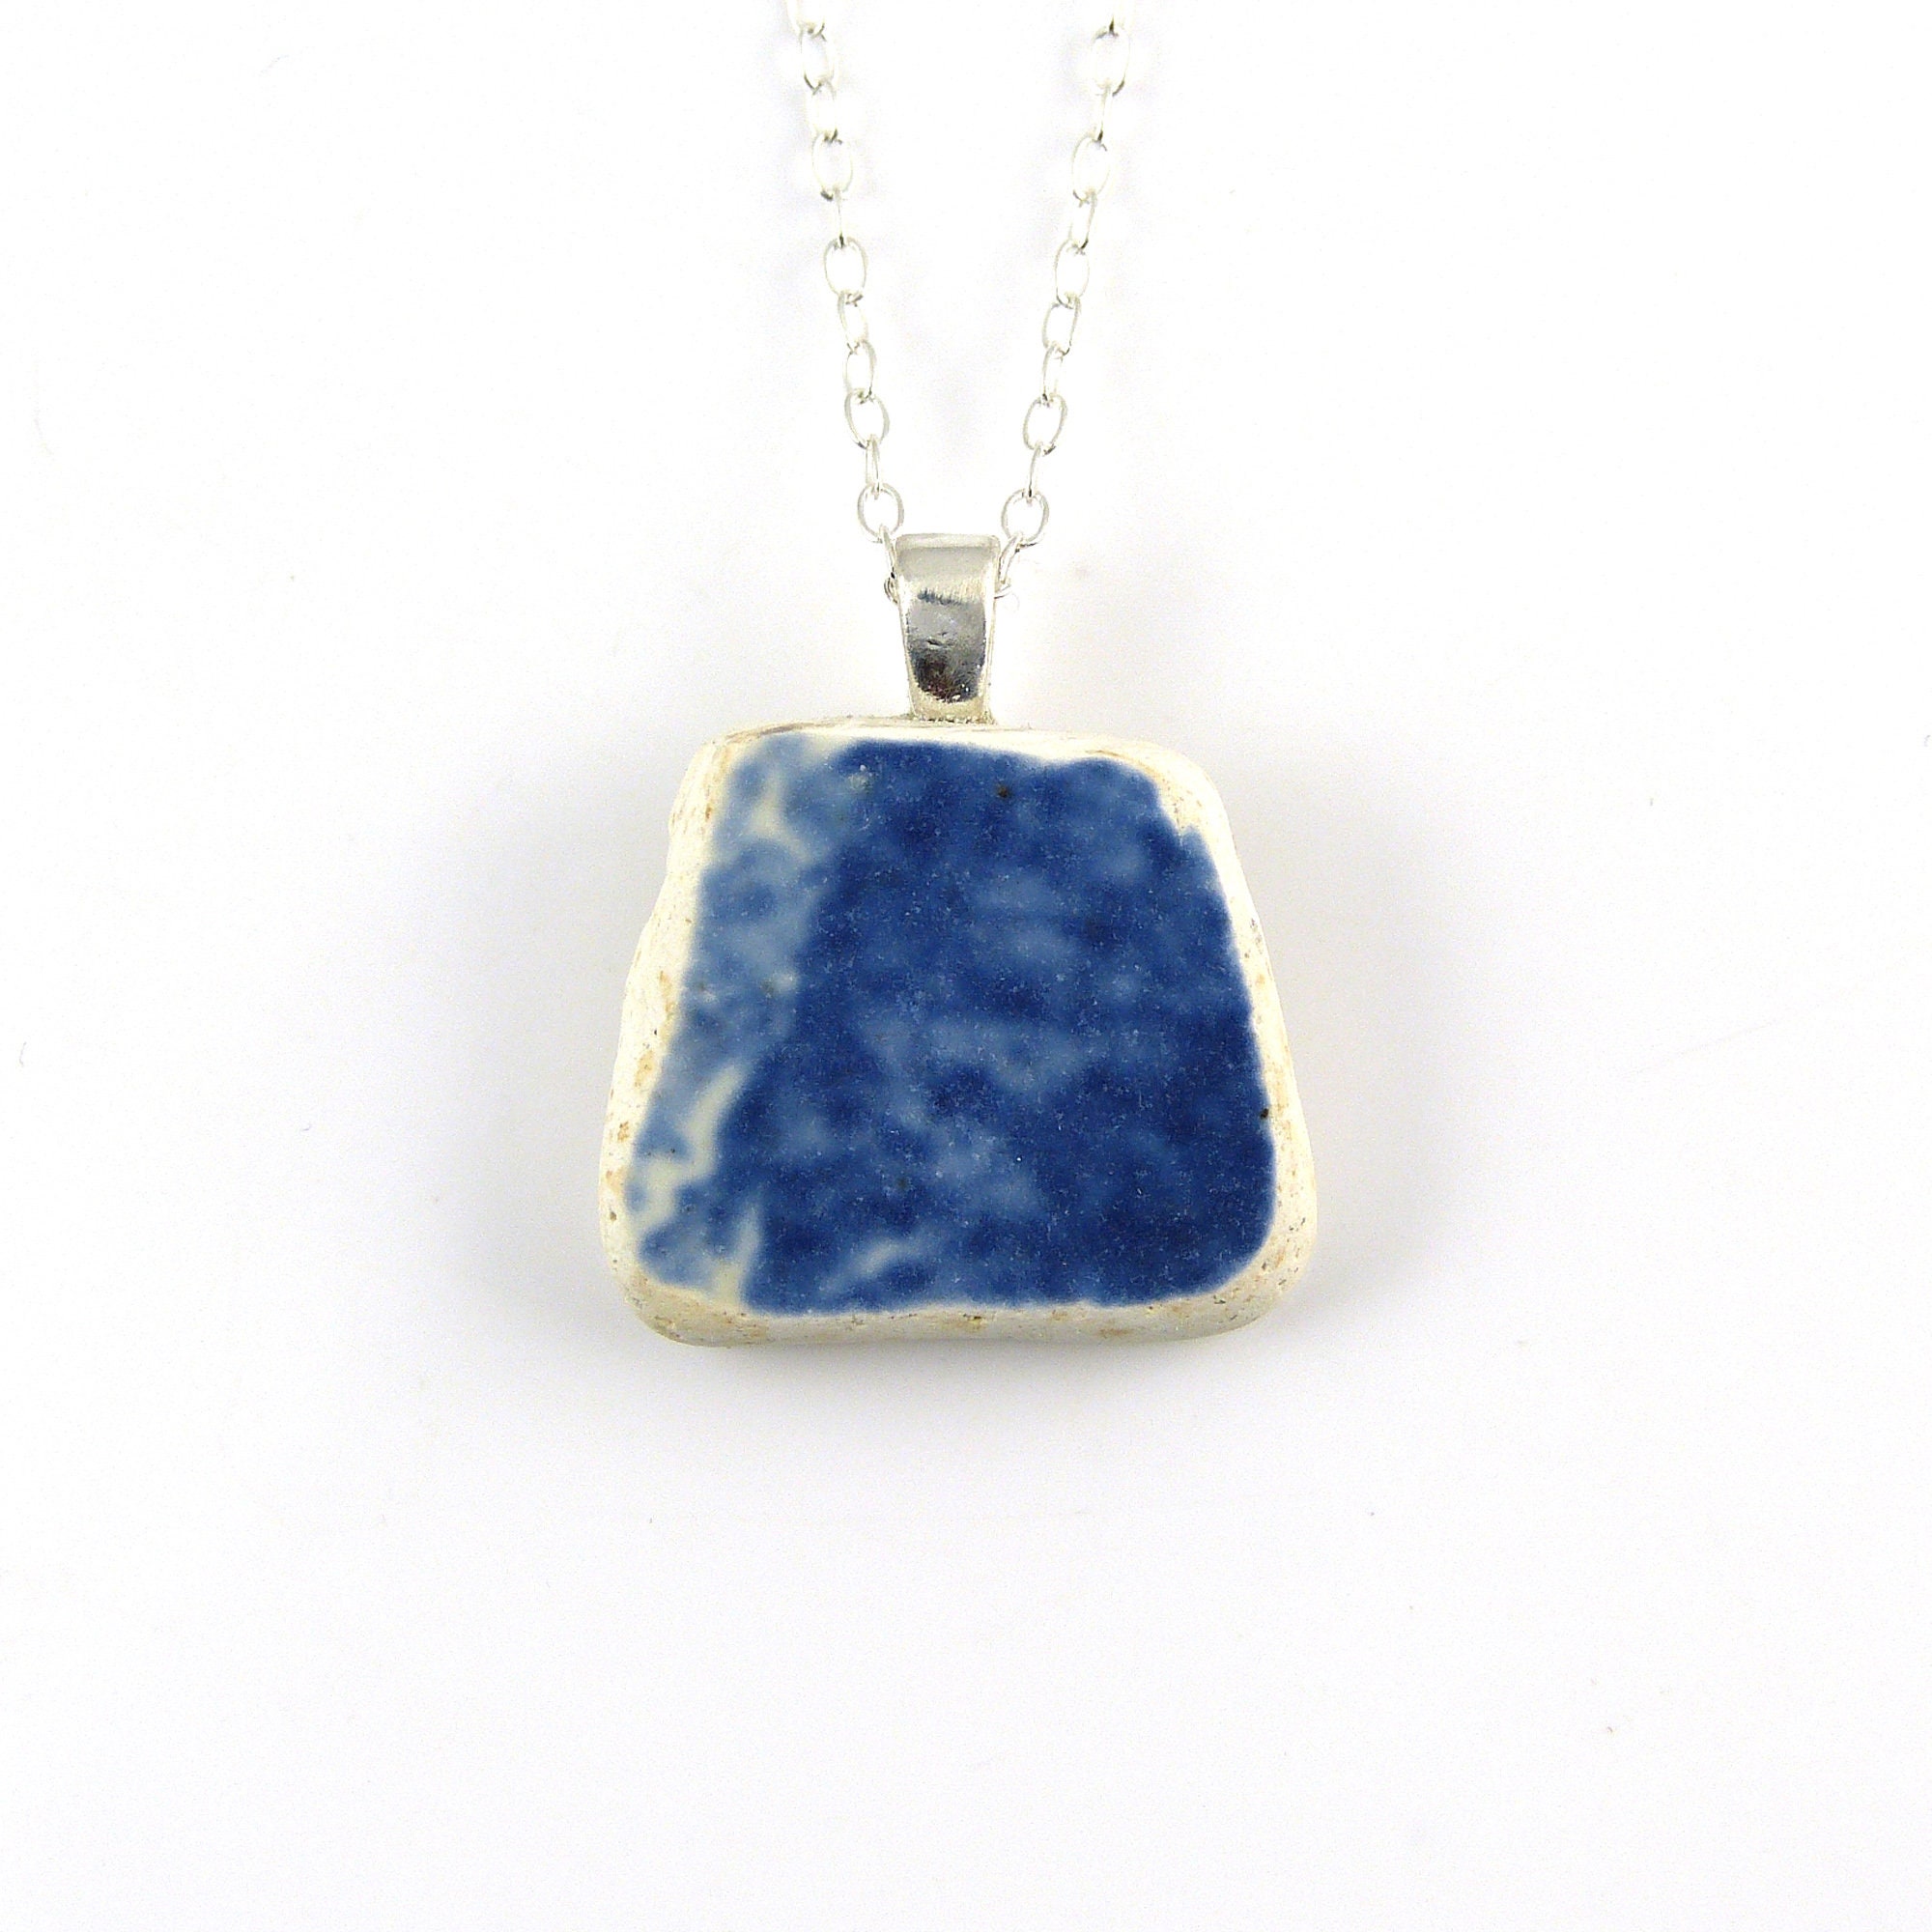 Triangular blue and white beach pottery pendant